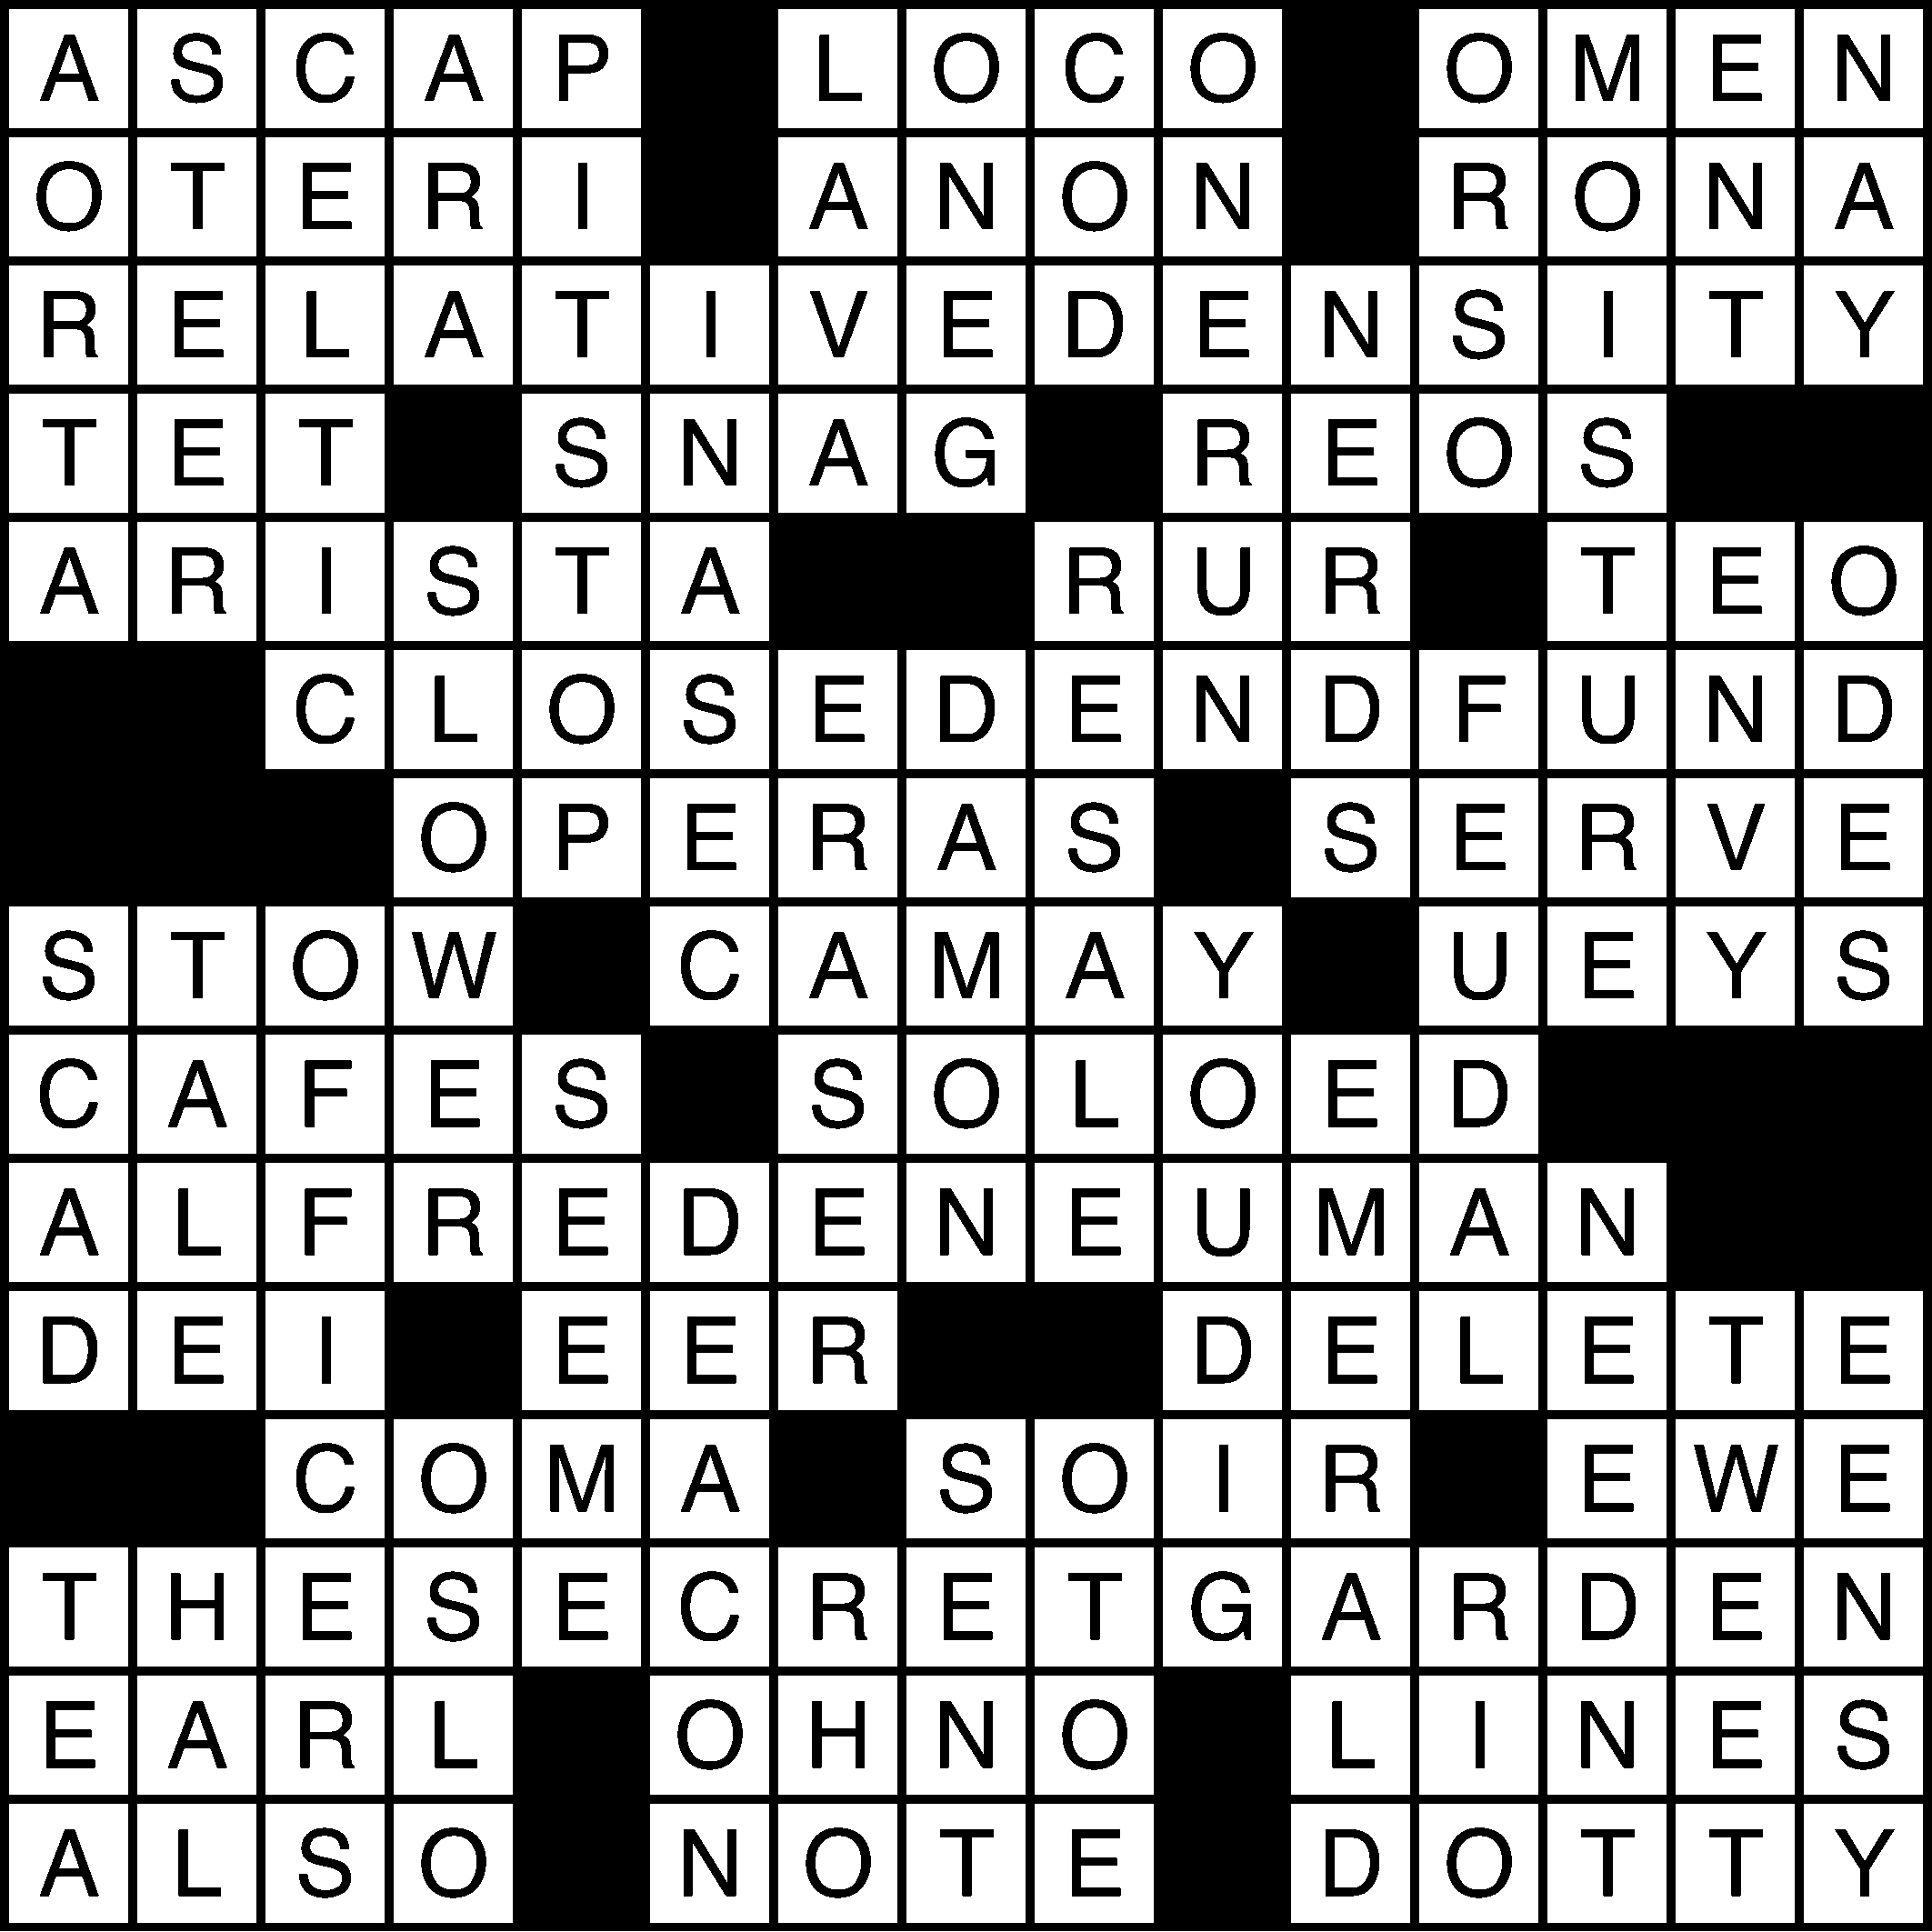 03/27/2014 Crossword: Answers